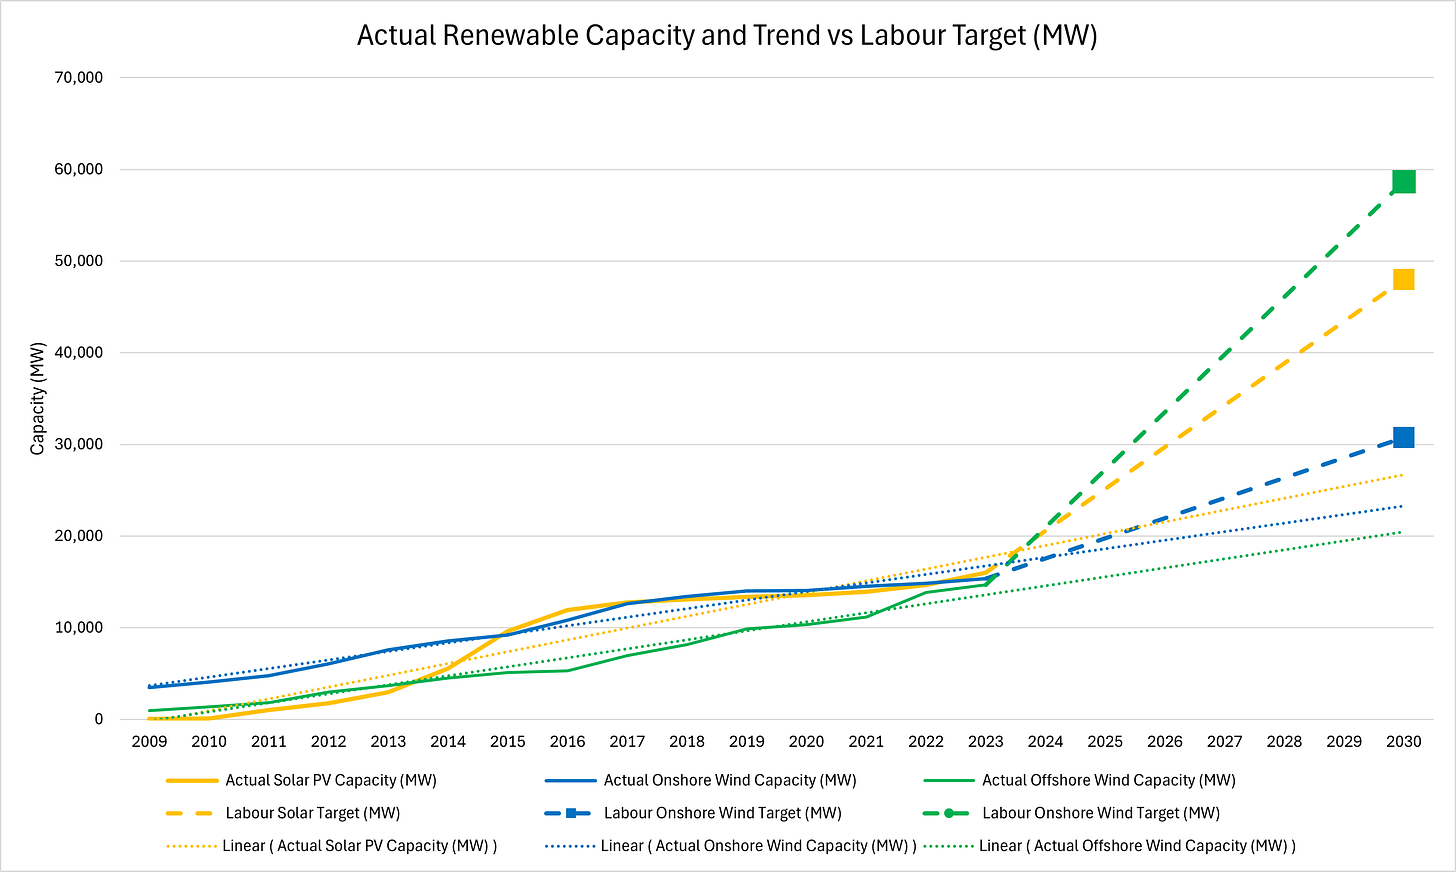 Figure C - Actual Renewables Capacity and Trend vs Labour Target (MW)